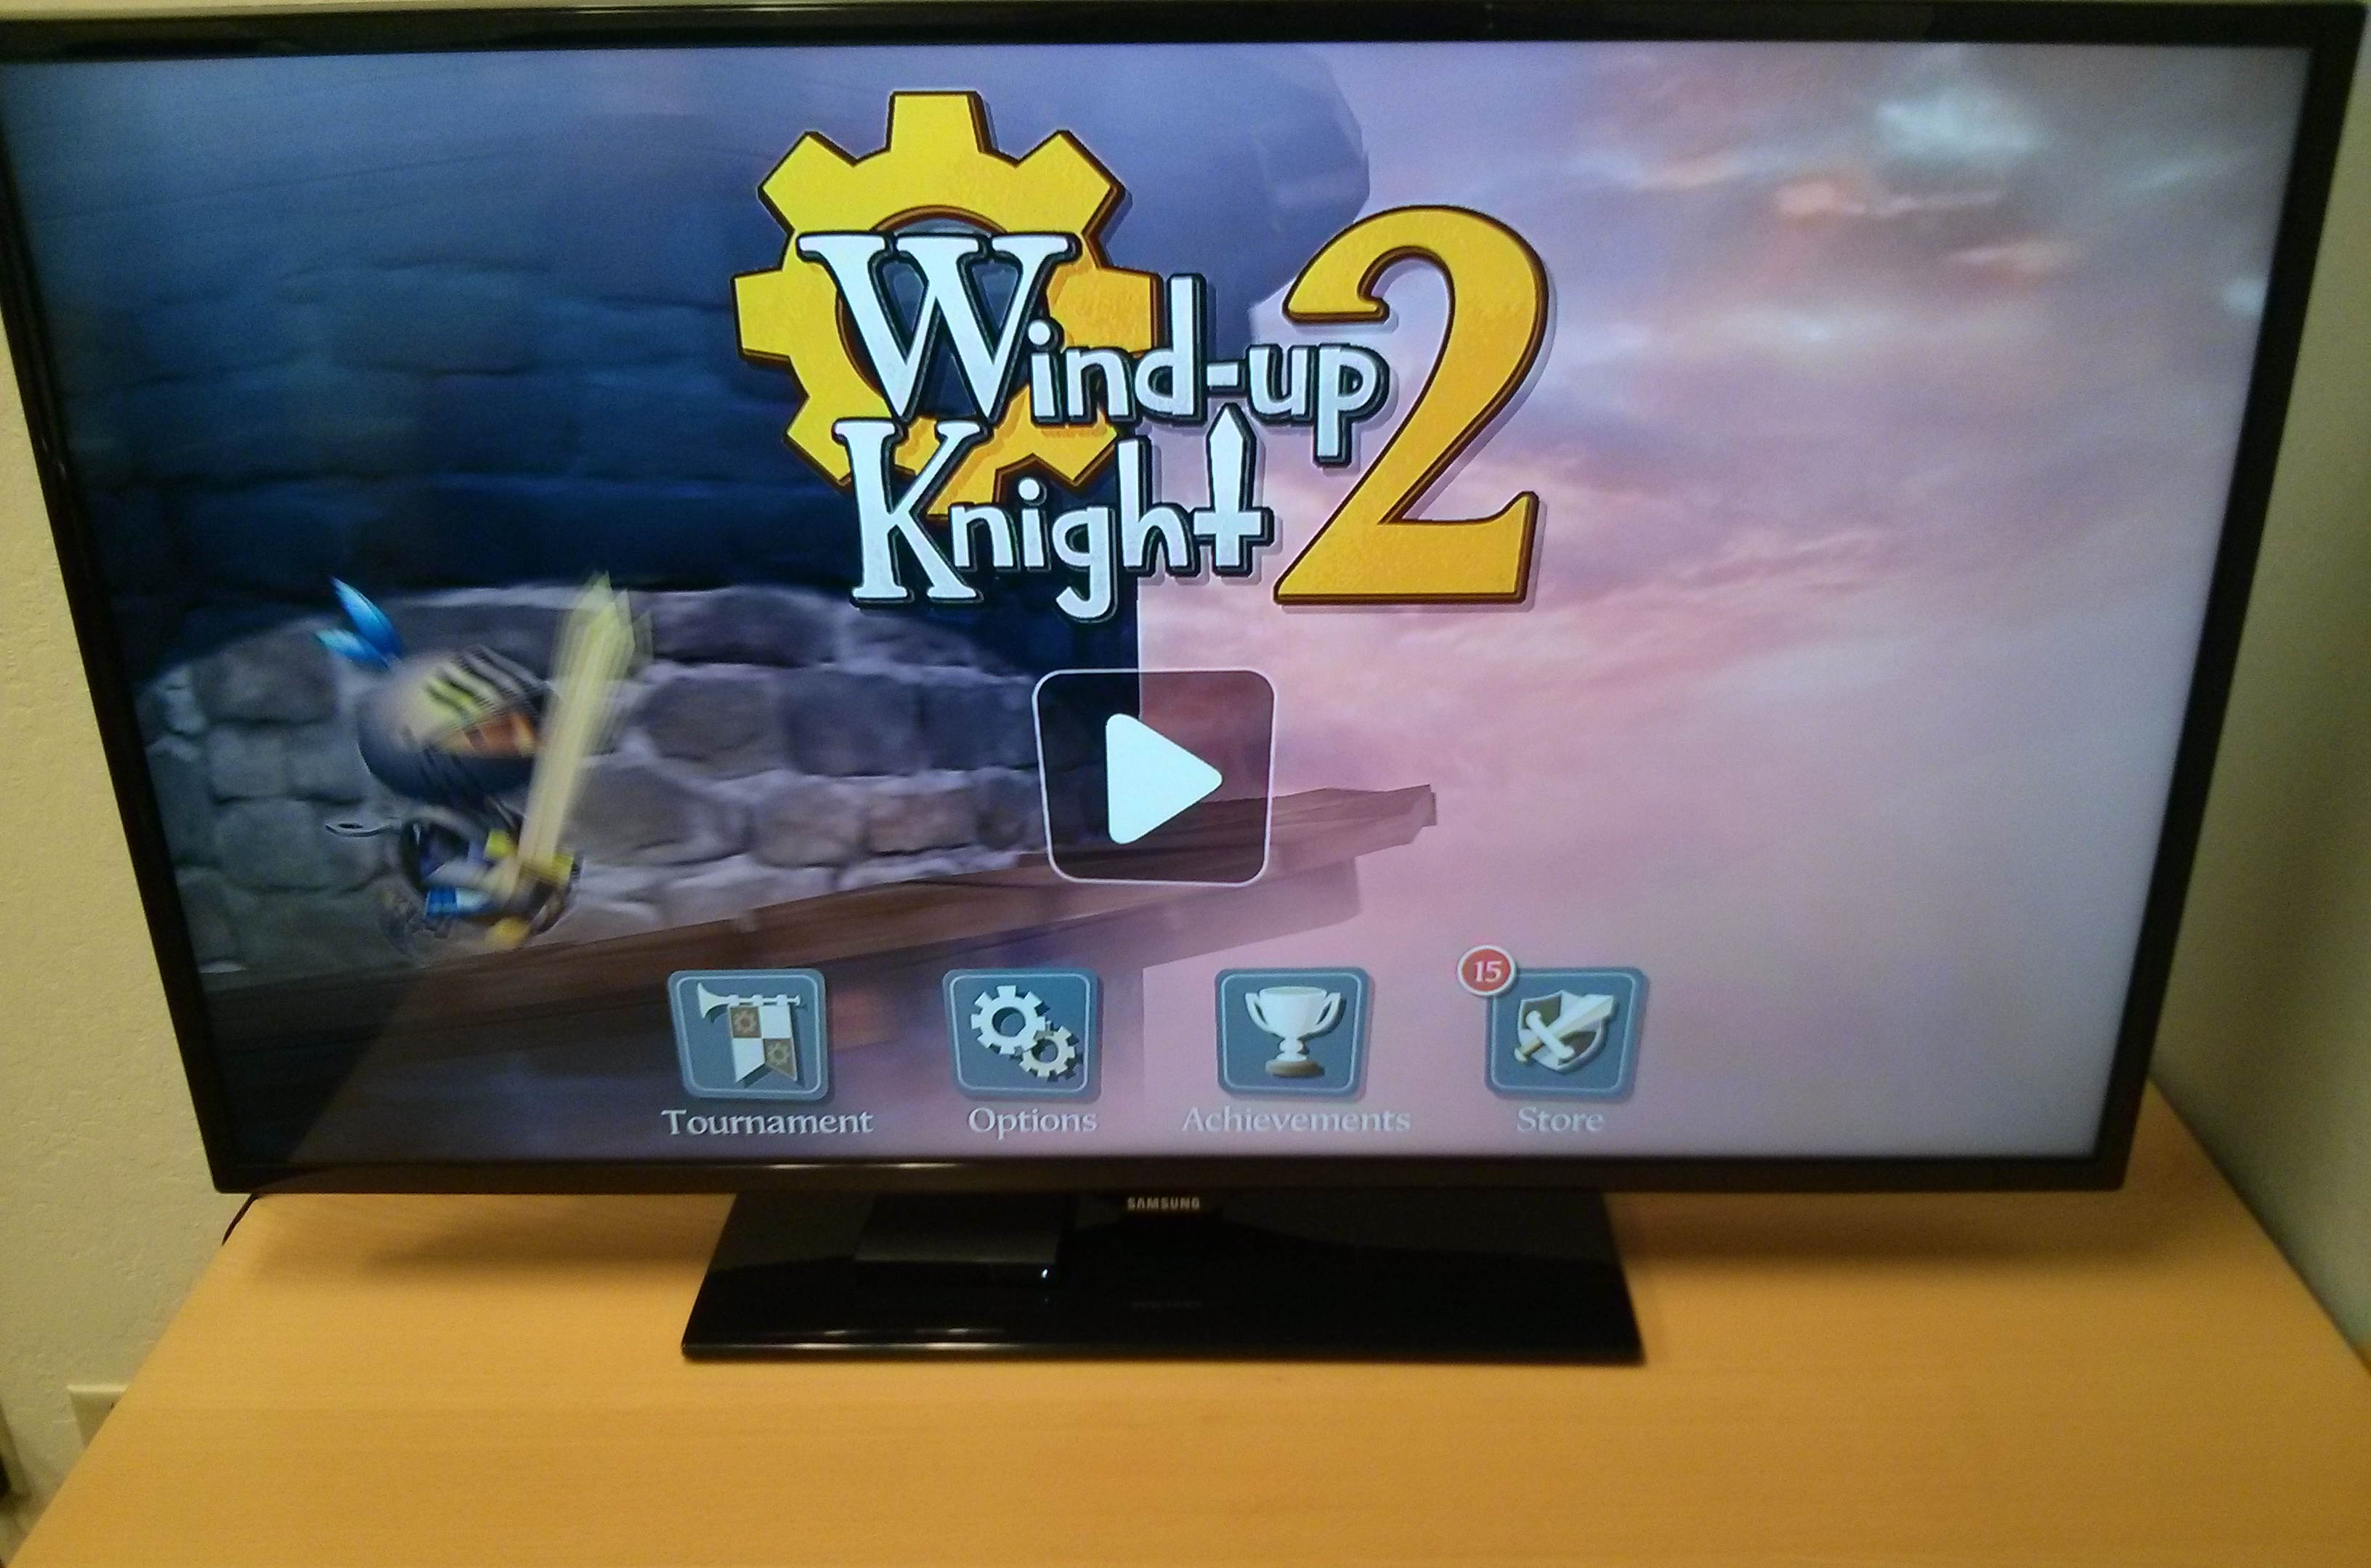 Wind-up Knight 2 is pretty flippin' sweet on a TV.